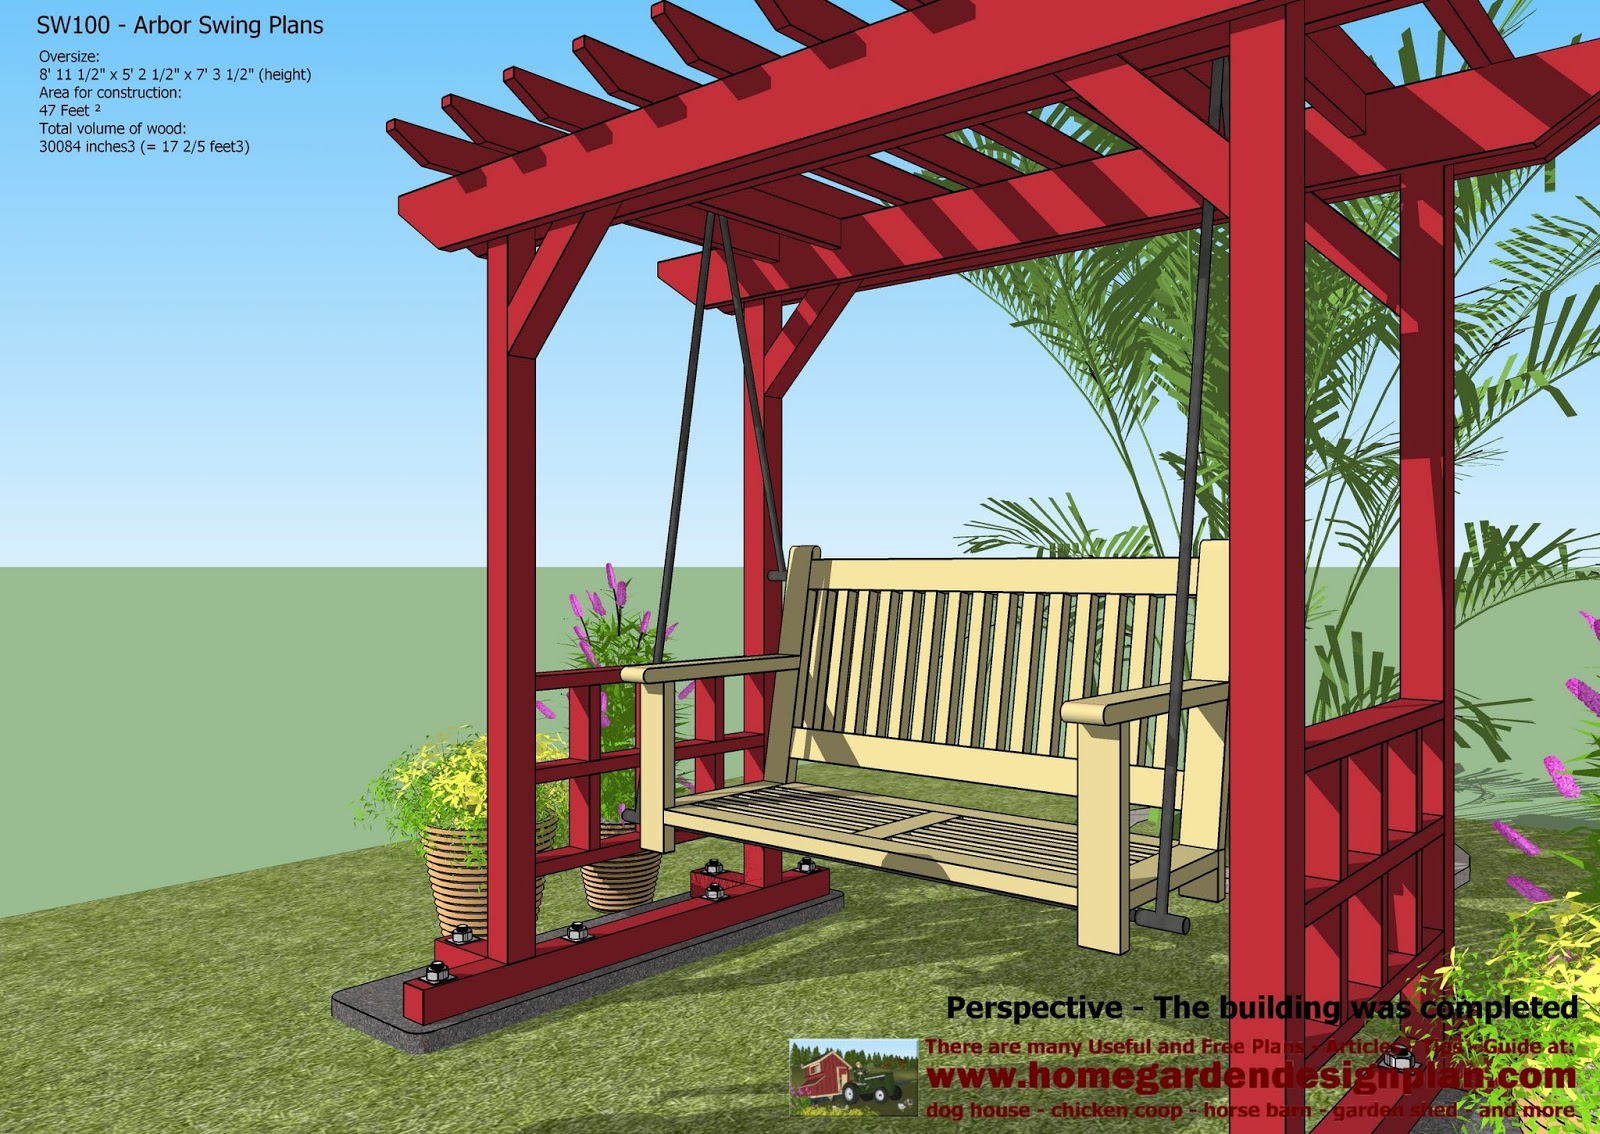 home garden plans: SW100 - Arbor Swing Plans - Swing Woodworking Plans 